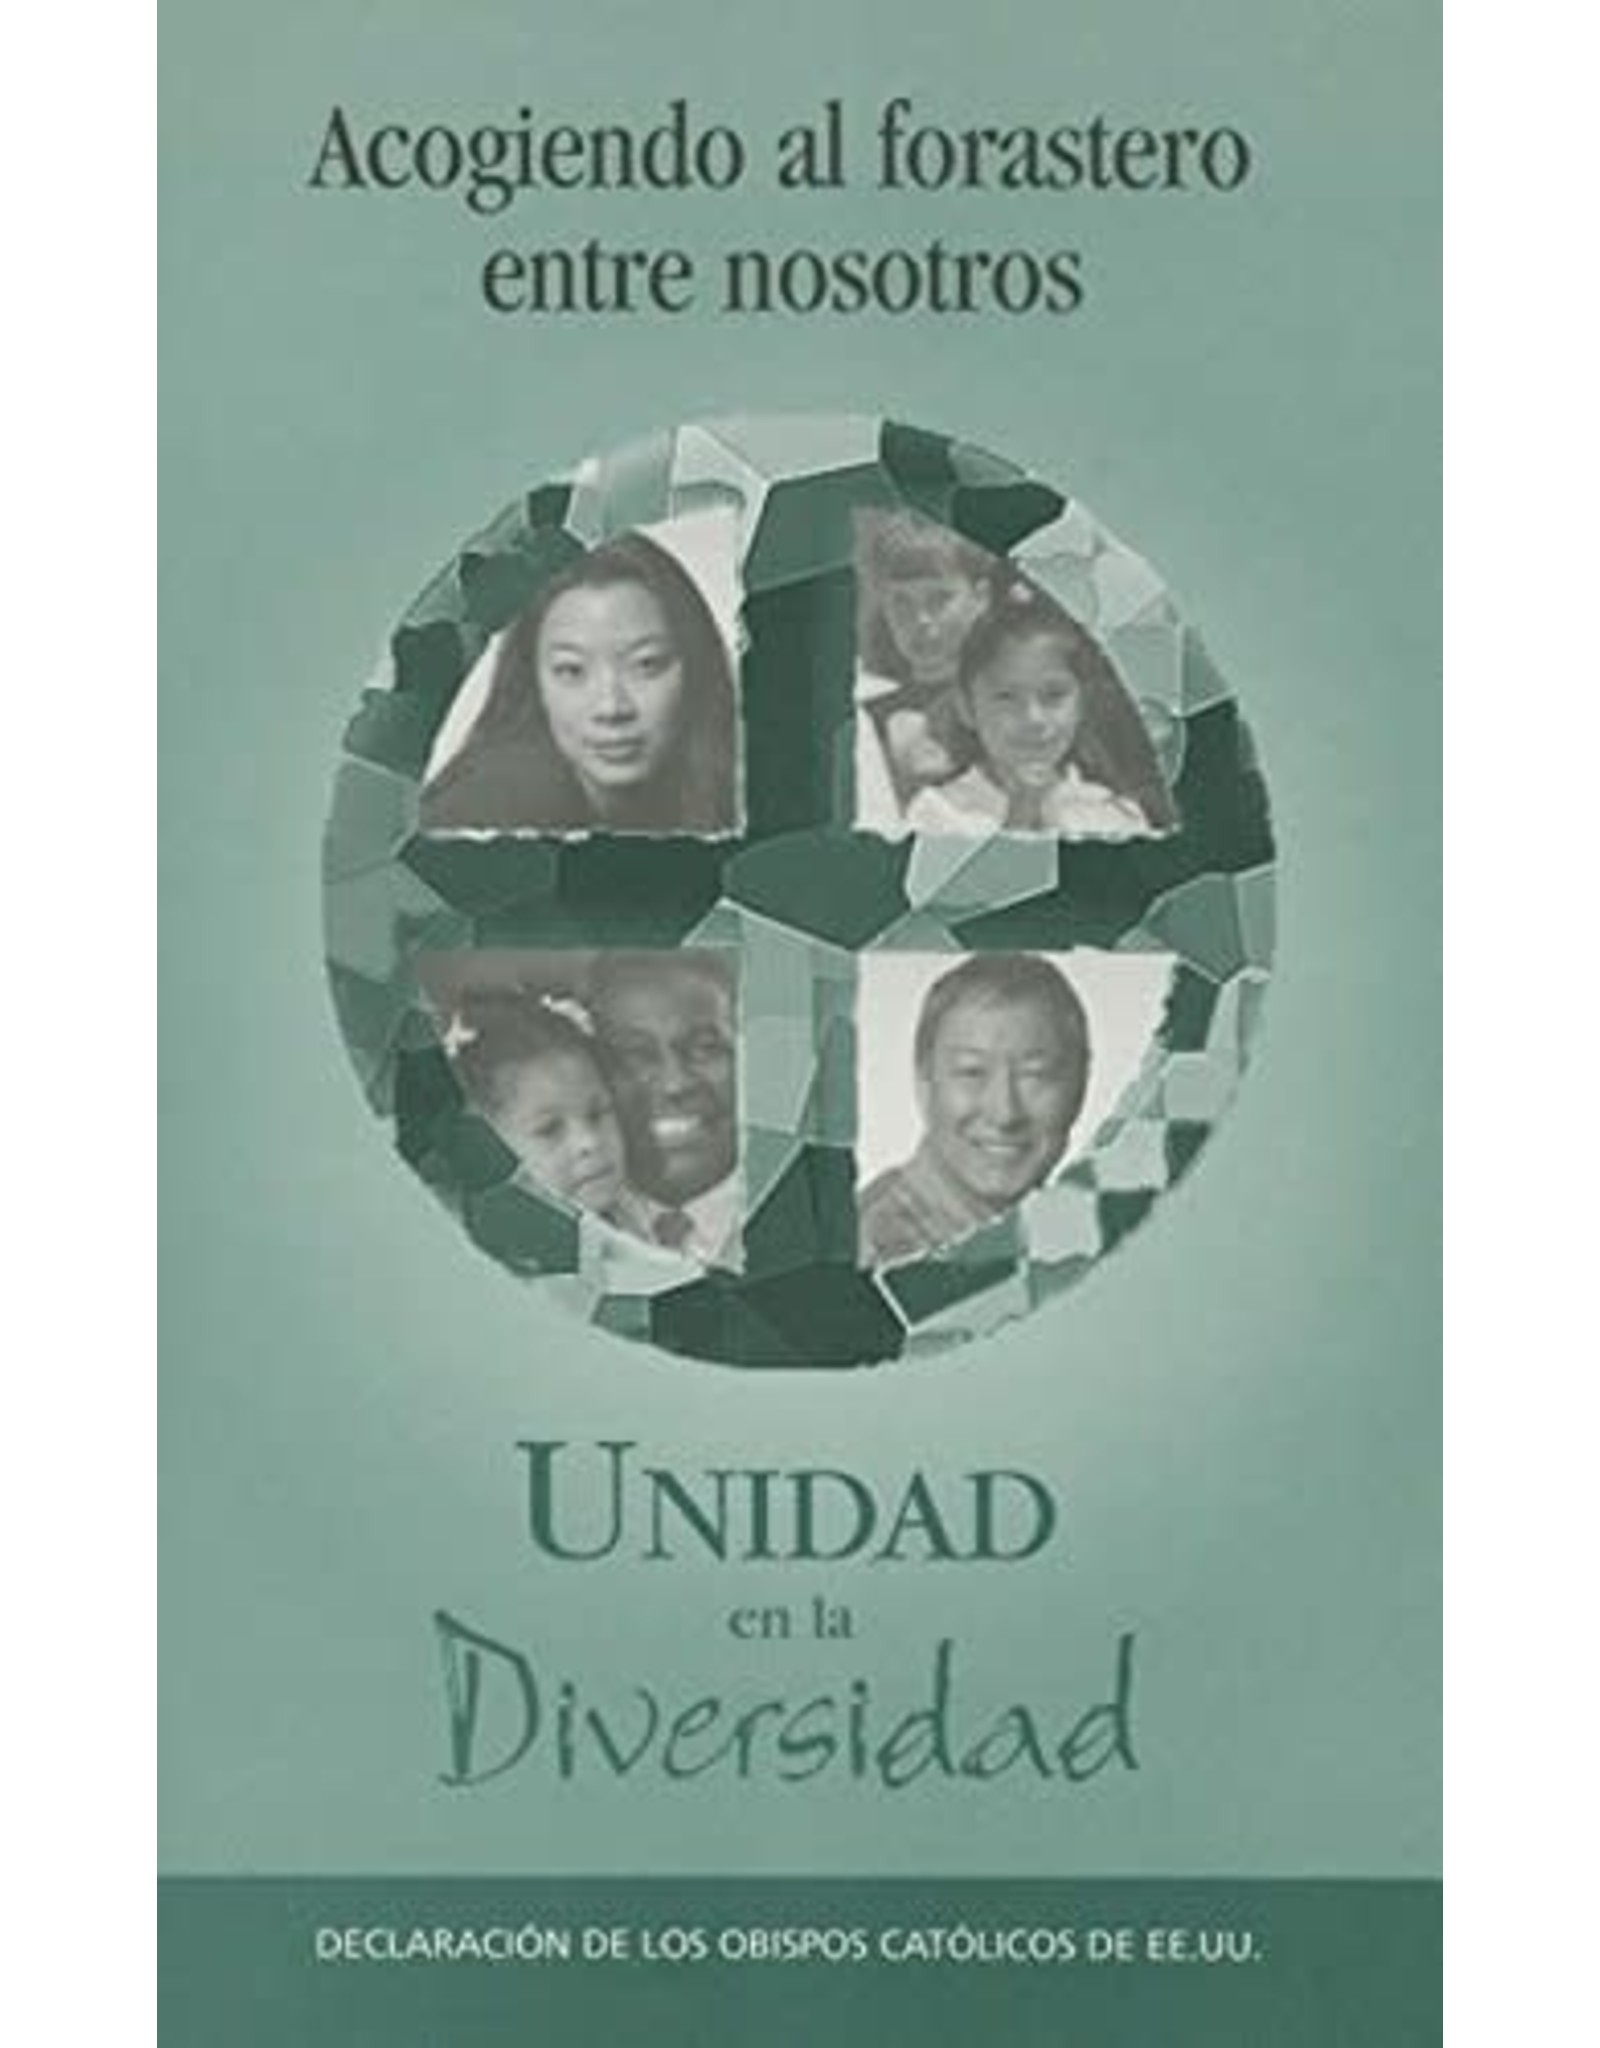 Welcoming the Stranger Among us: Unidad en la diversidad (Spanish Edition)